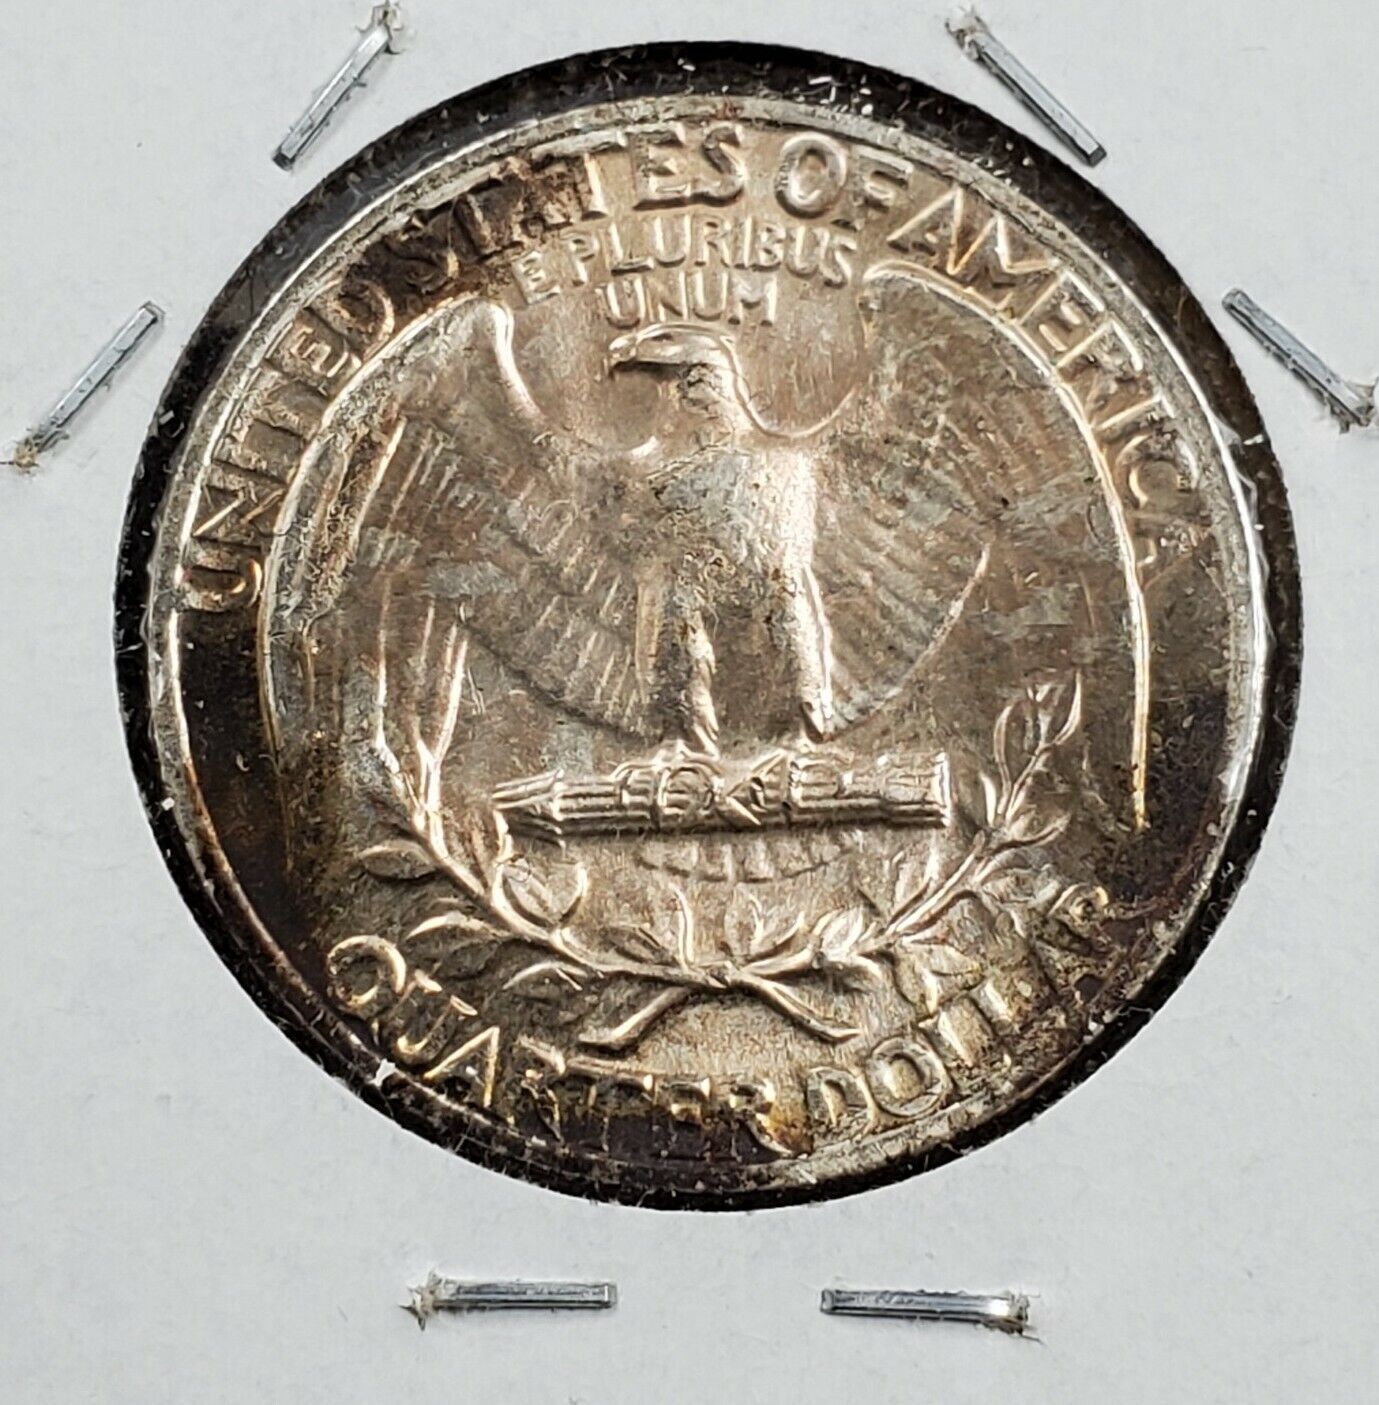 1964 p Washington Silver Quarter Coin BU Uncirculated PQ END of Roll Toning Tone